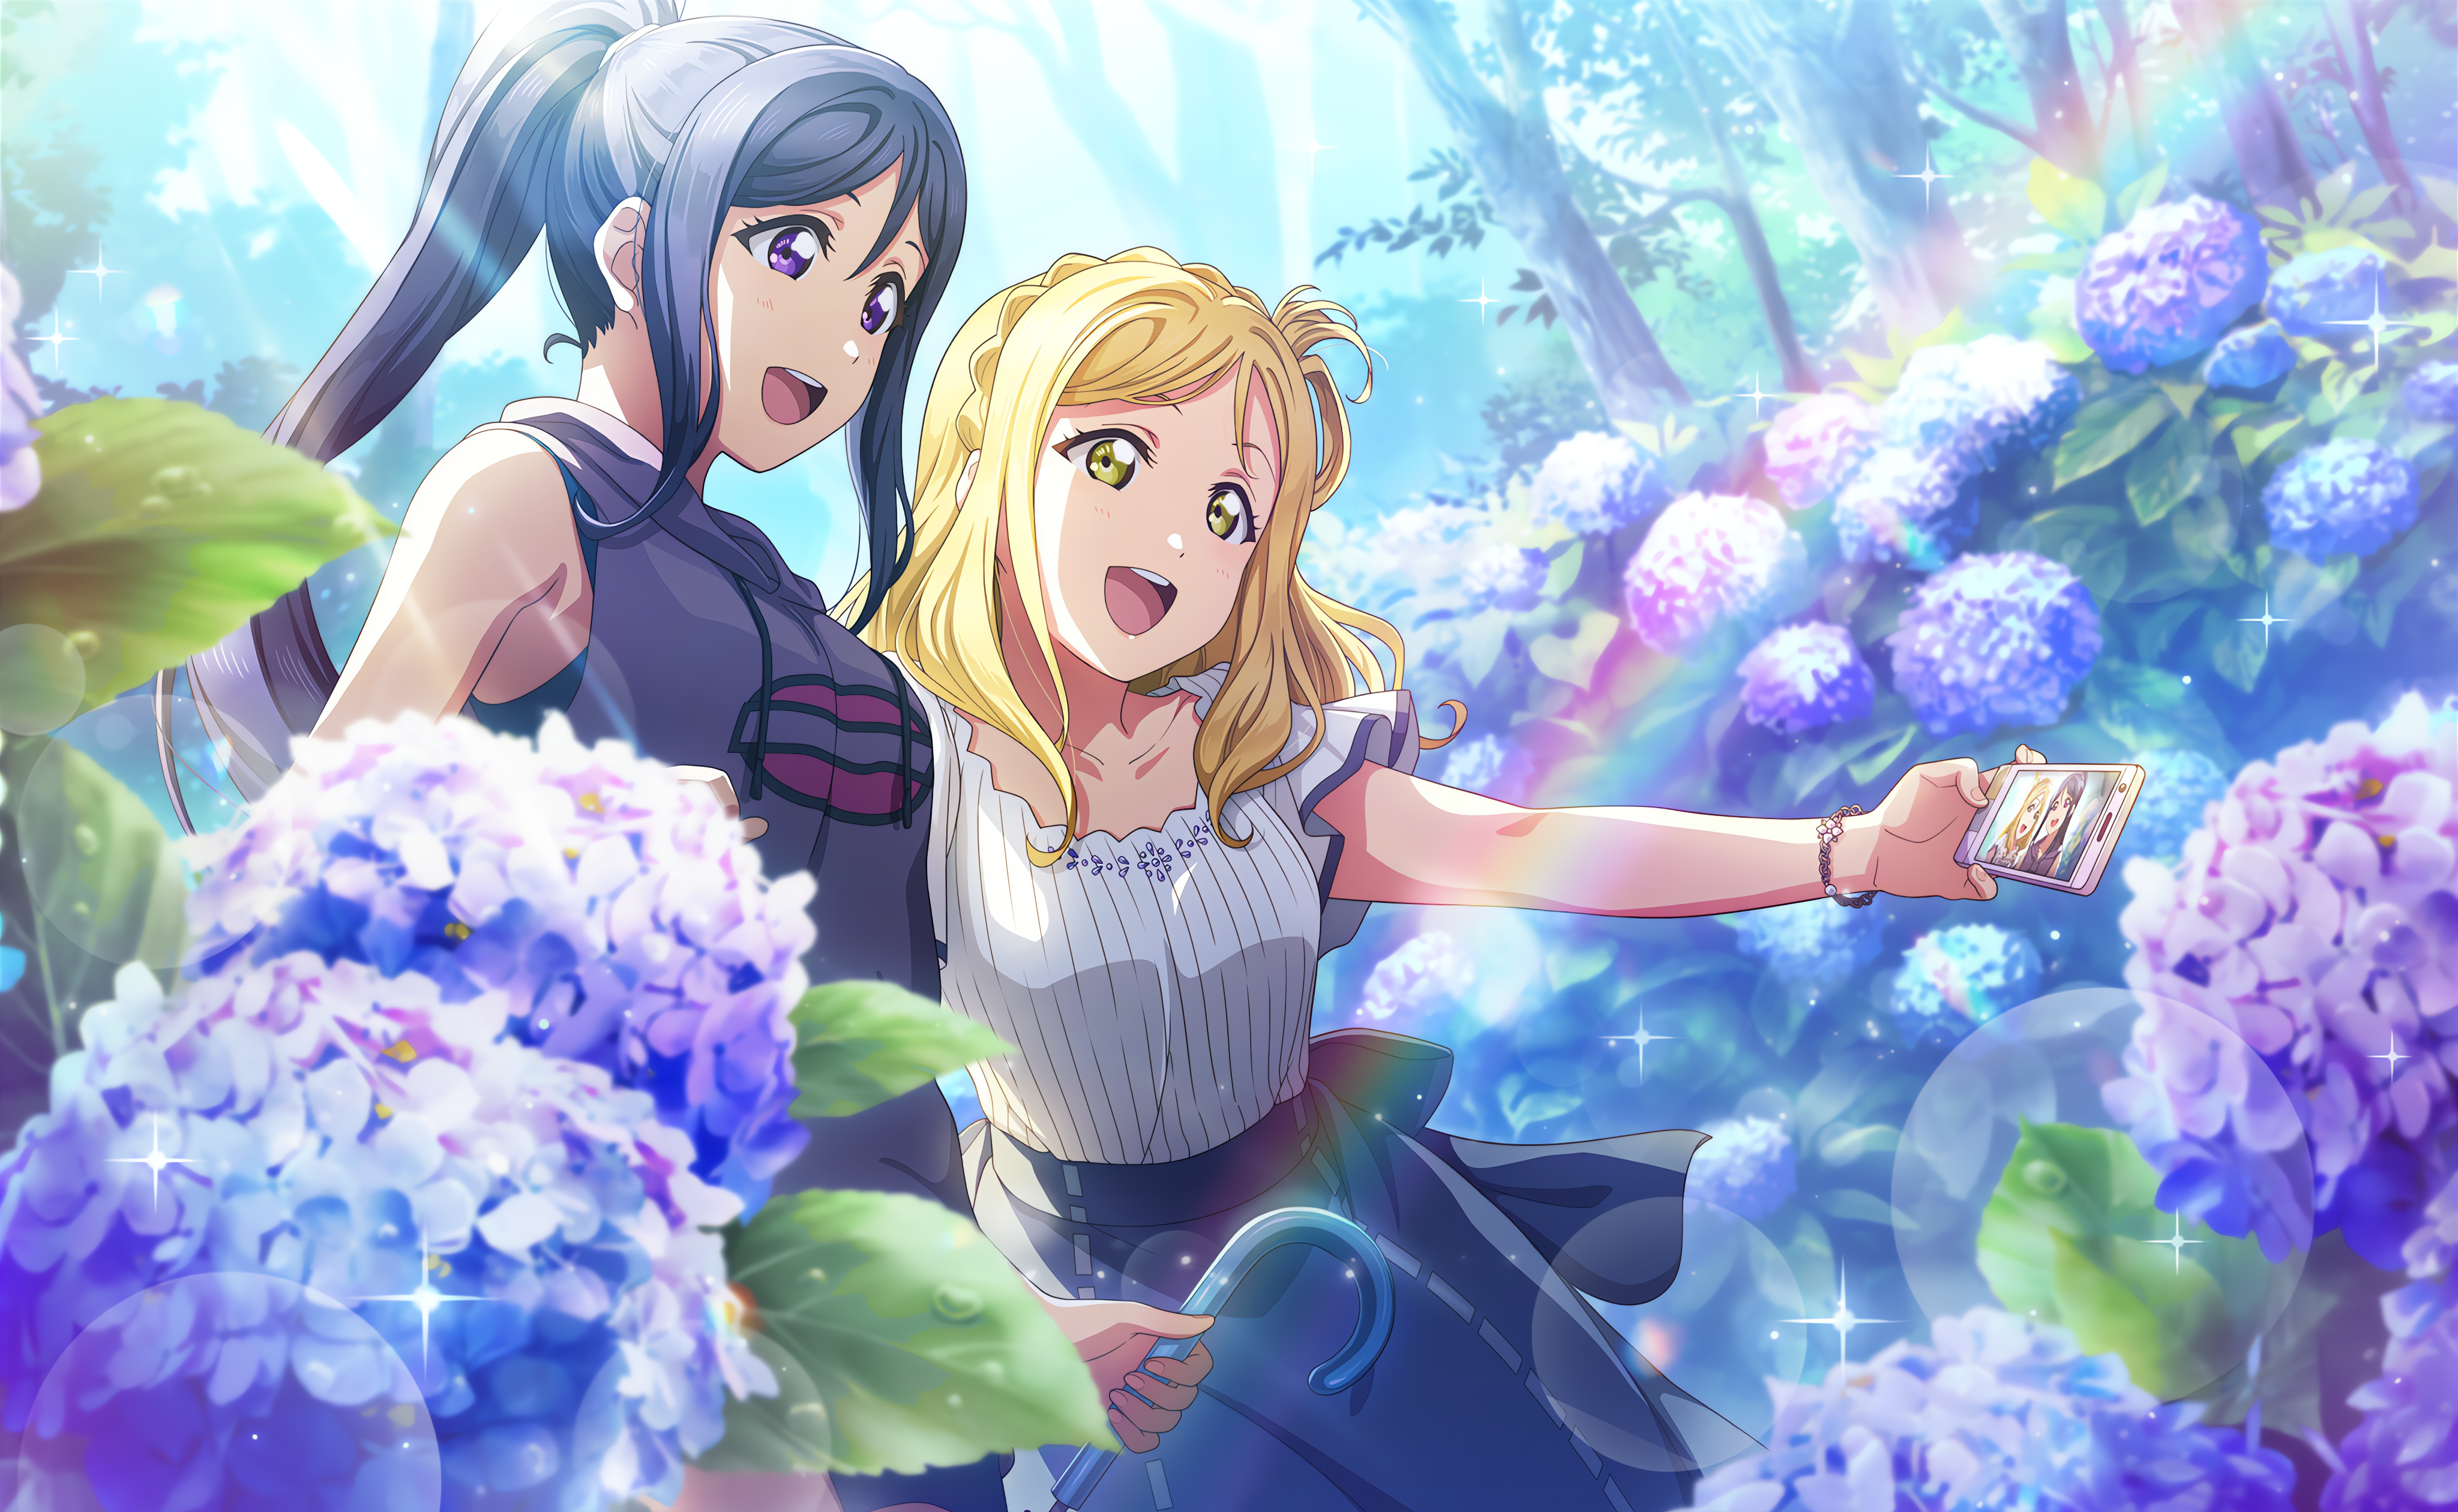 Anime 4096x2520 Ohara Mari Love Live! Love Live! Sunshine anime anime girls flowers rainbows long hair ponytail trees sunlight phone selfies stars